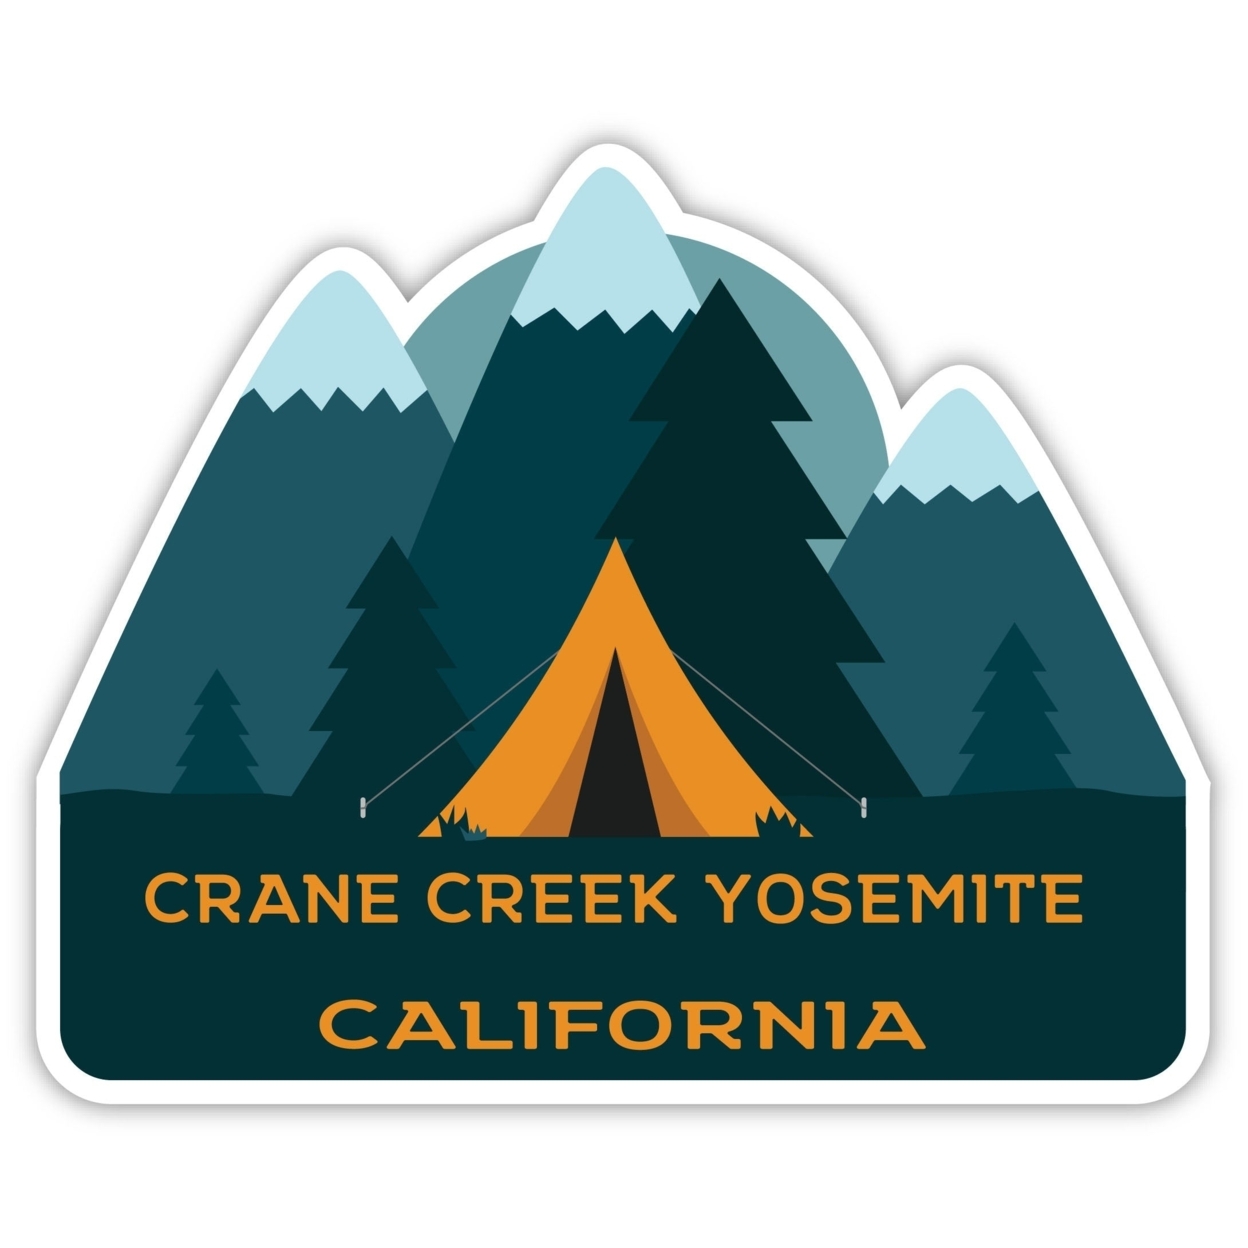 Crane Creek Yosemite California Souvenir Decorative Stickers (Choose Theme And Size) - 4-Pack, 8-Inch, Tent